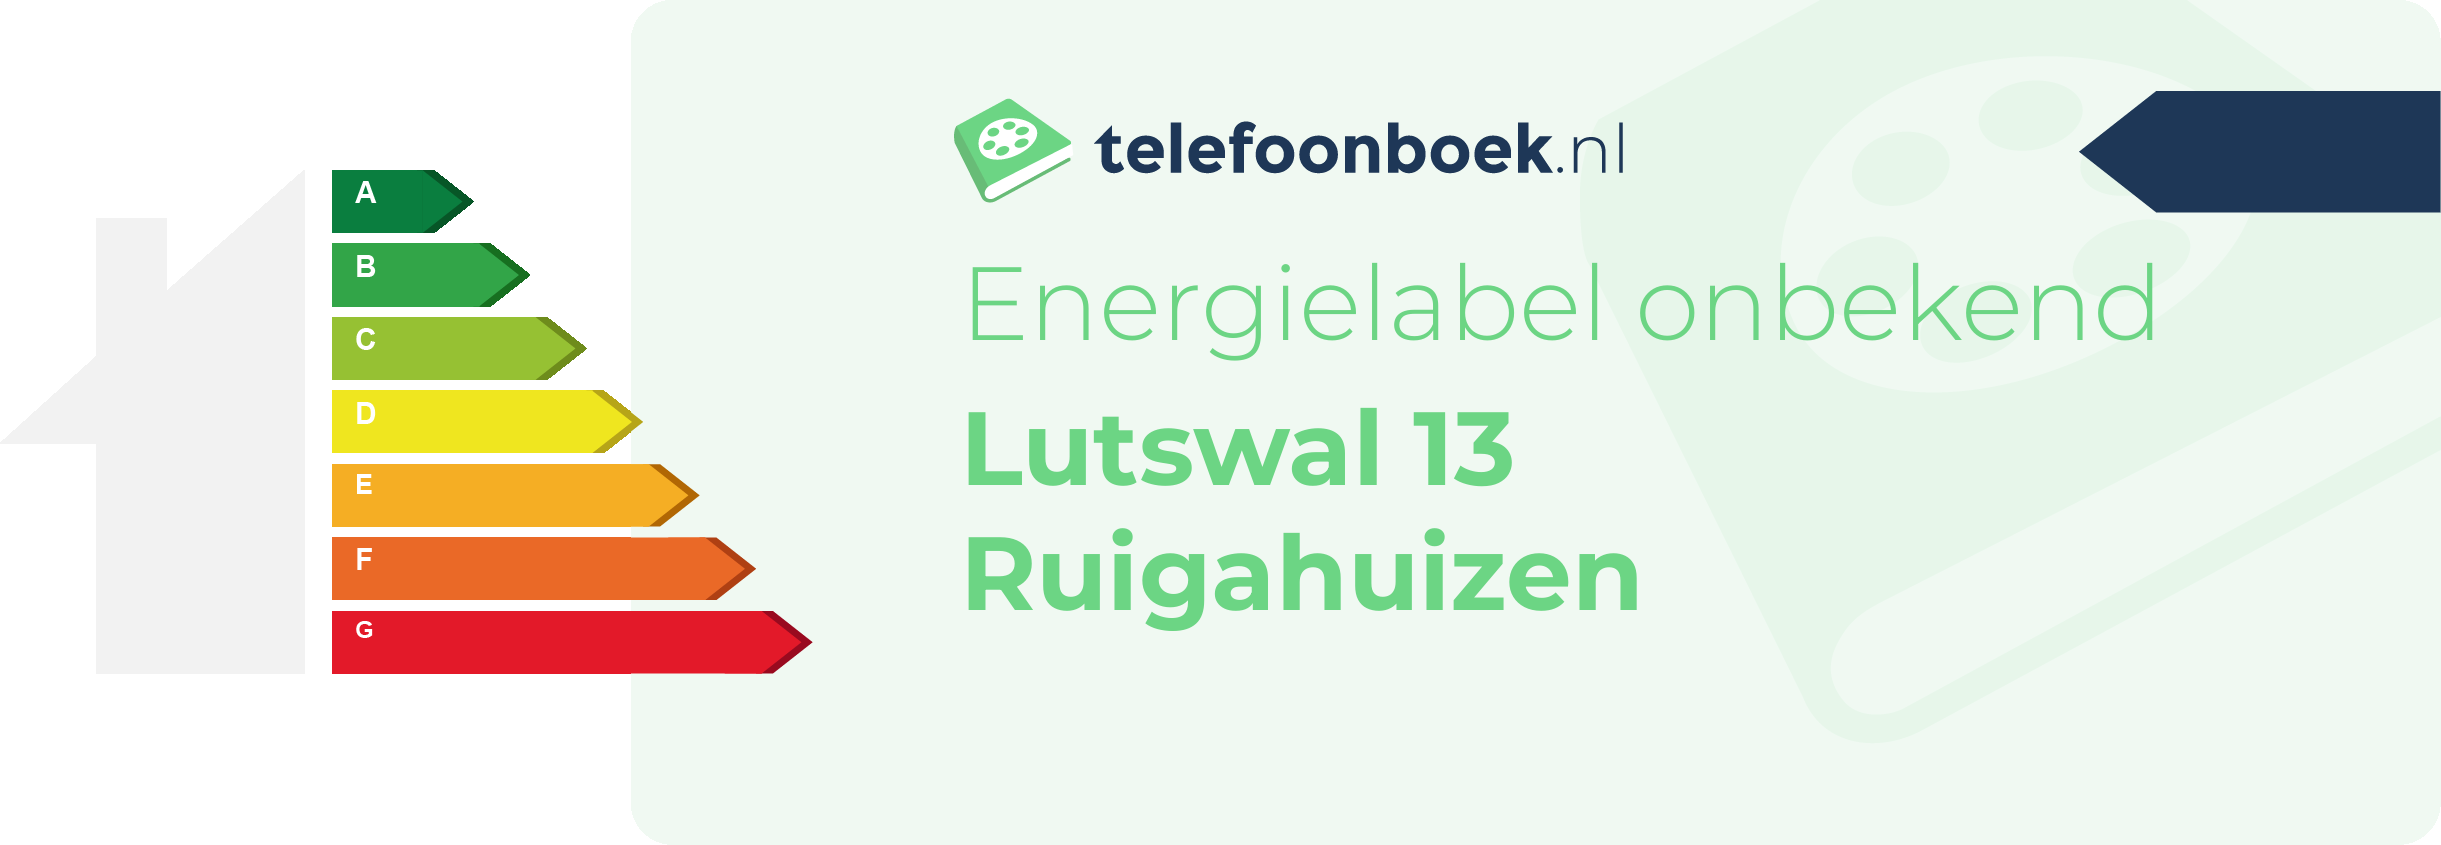 Energielabel Lutswal 13 Ruigahuizen